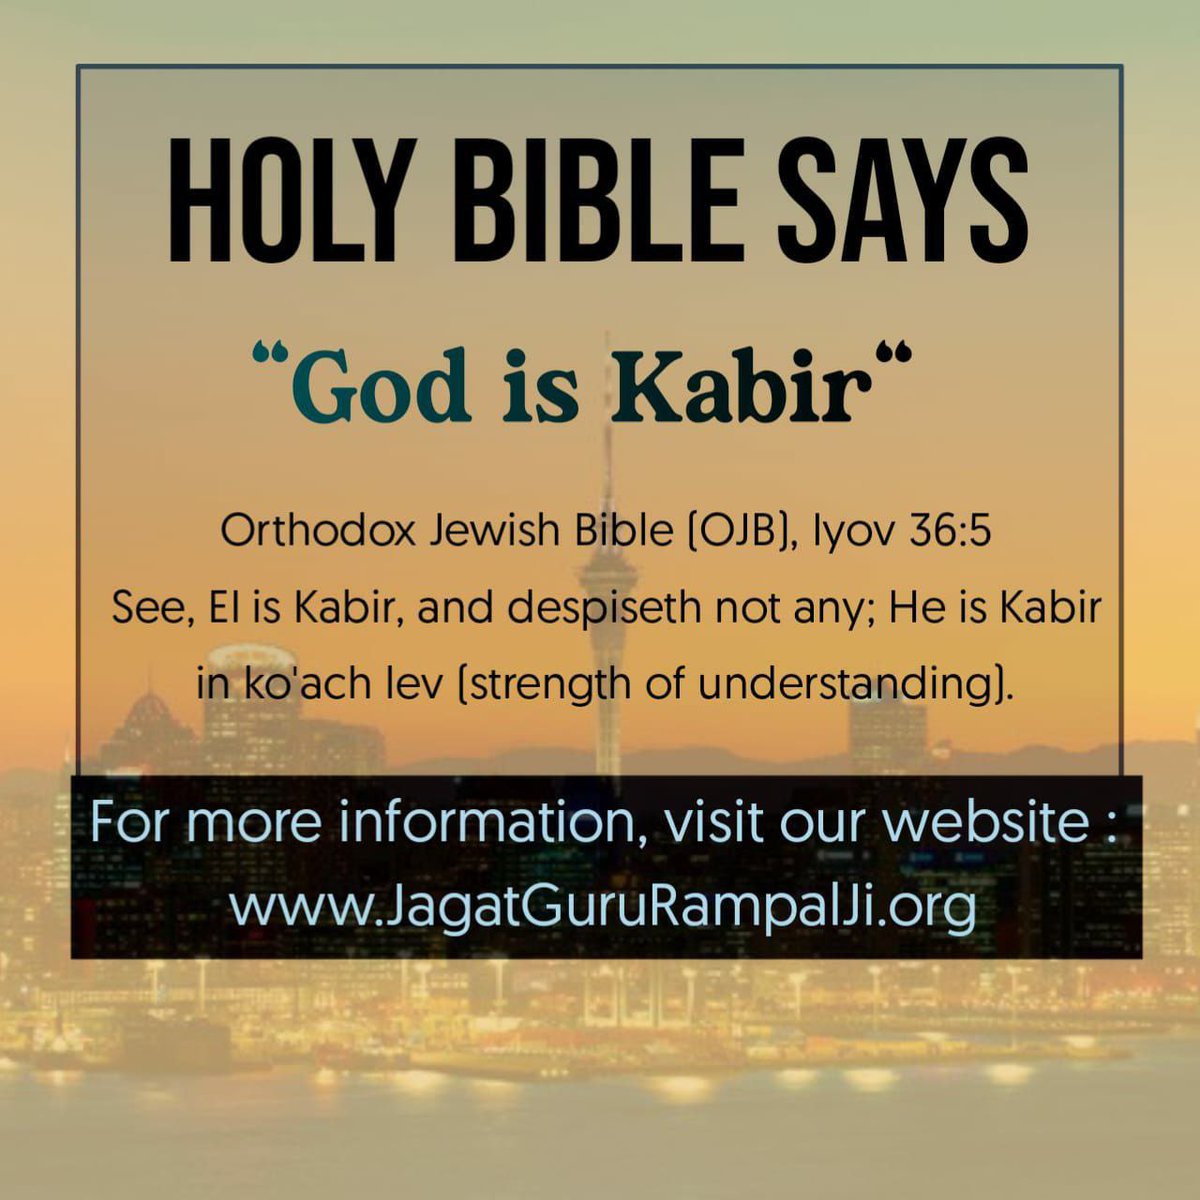 #GodMorningTuesday #TuesdayMotivation Holy Bible says 'God is Kabir' Orthodox Jewish Bible (OJB), Iyov 36:5 See, EI is Kabir, and despiseth not any; He is Kabir in ko'ach lev (strength of understanding). For more info visit our website Jagatgururampalji.org